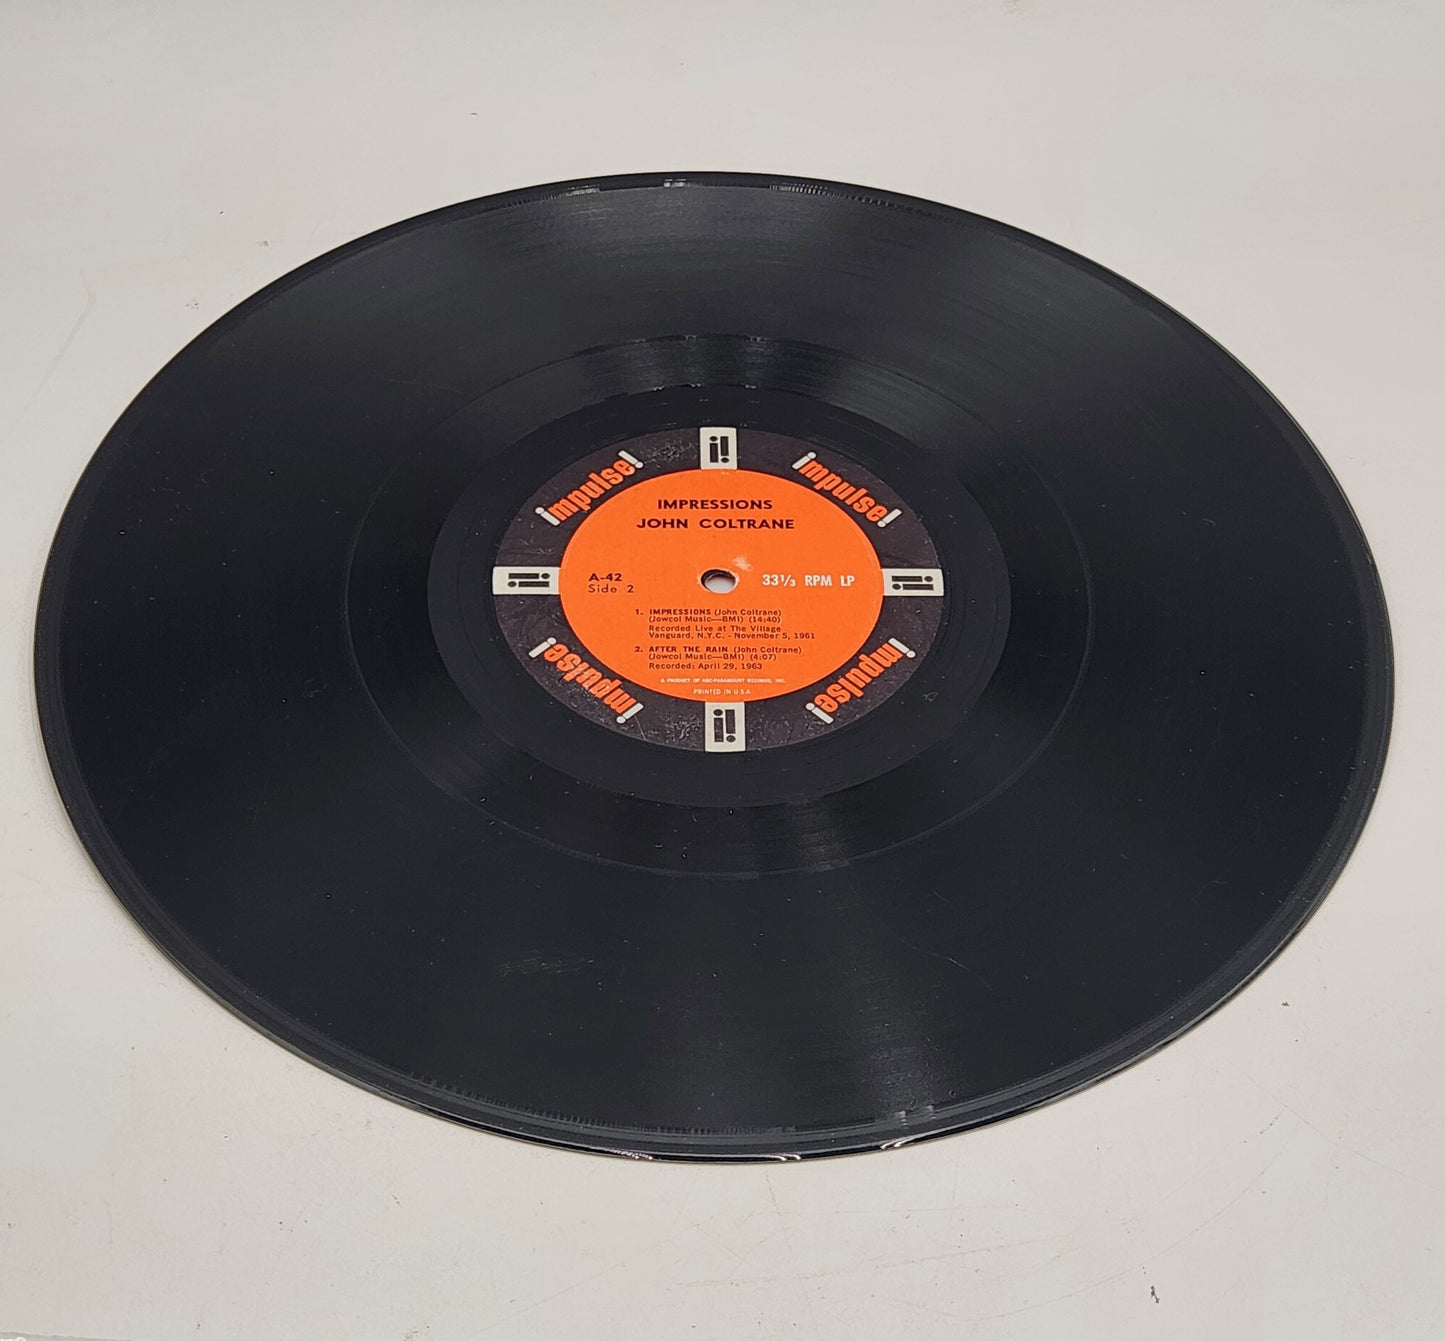 John Coltrane "Impressions" 1963 1st Mono Pressing Jazz Record Album